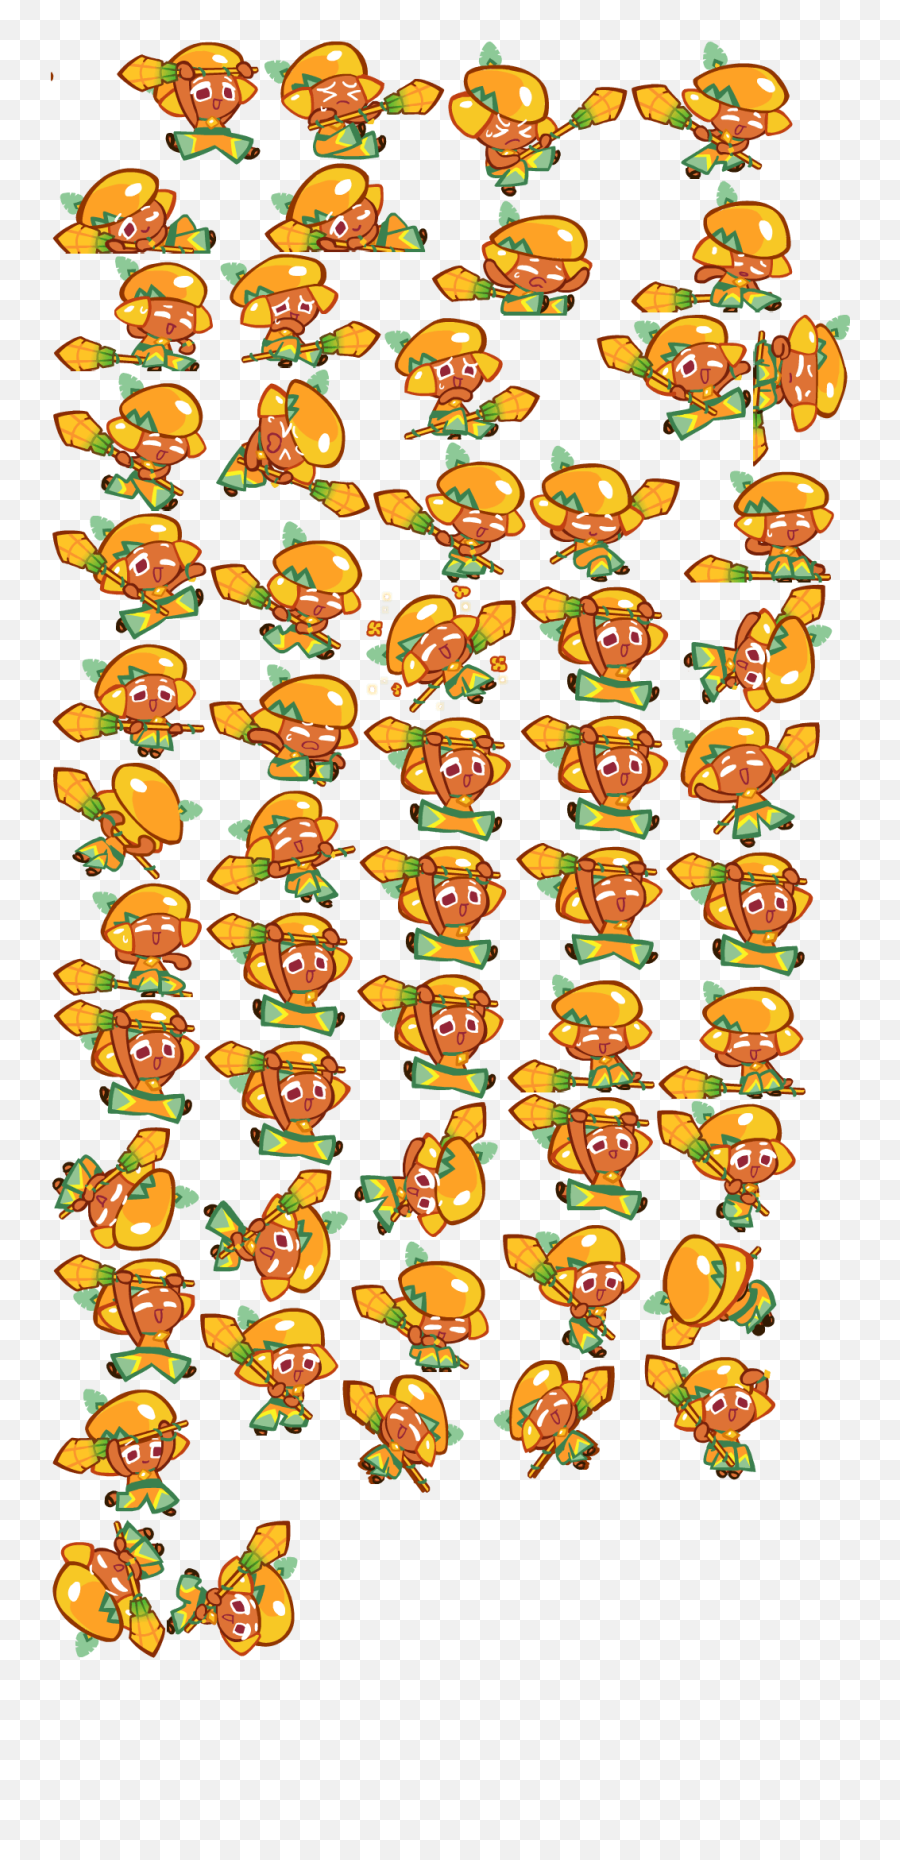 Mango - Mango Cookie Cookie Run Sprites Emoji,Mango Emojis Gif